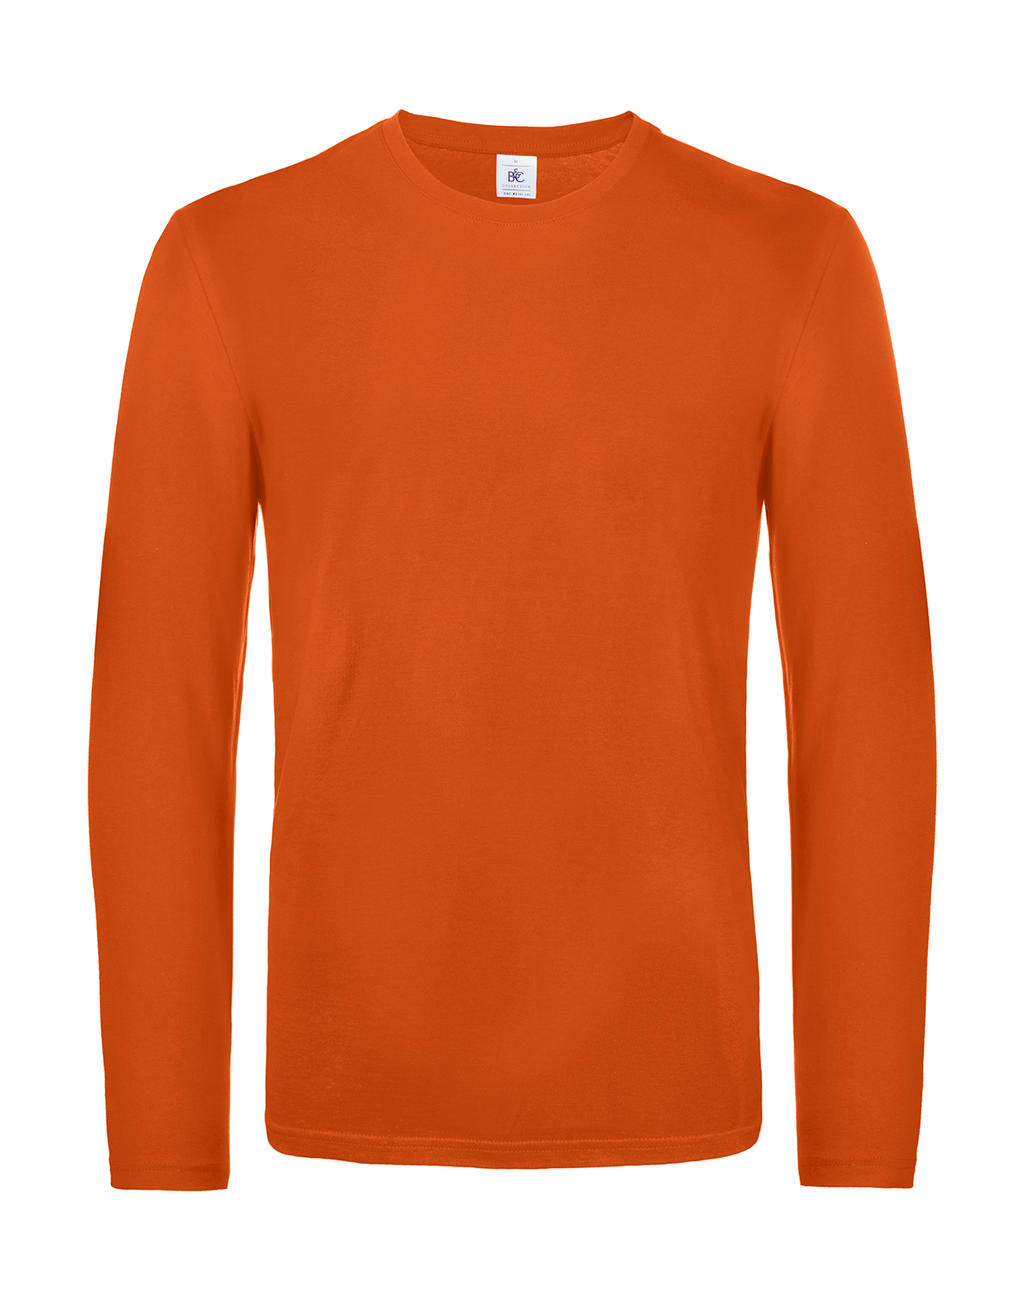 Tričko s dlhými rukávmi #E190 - urban orange